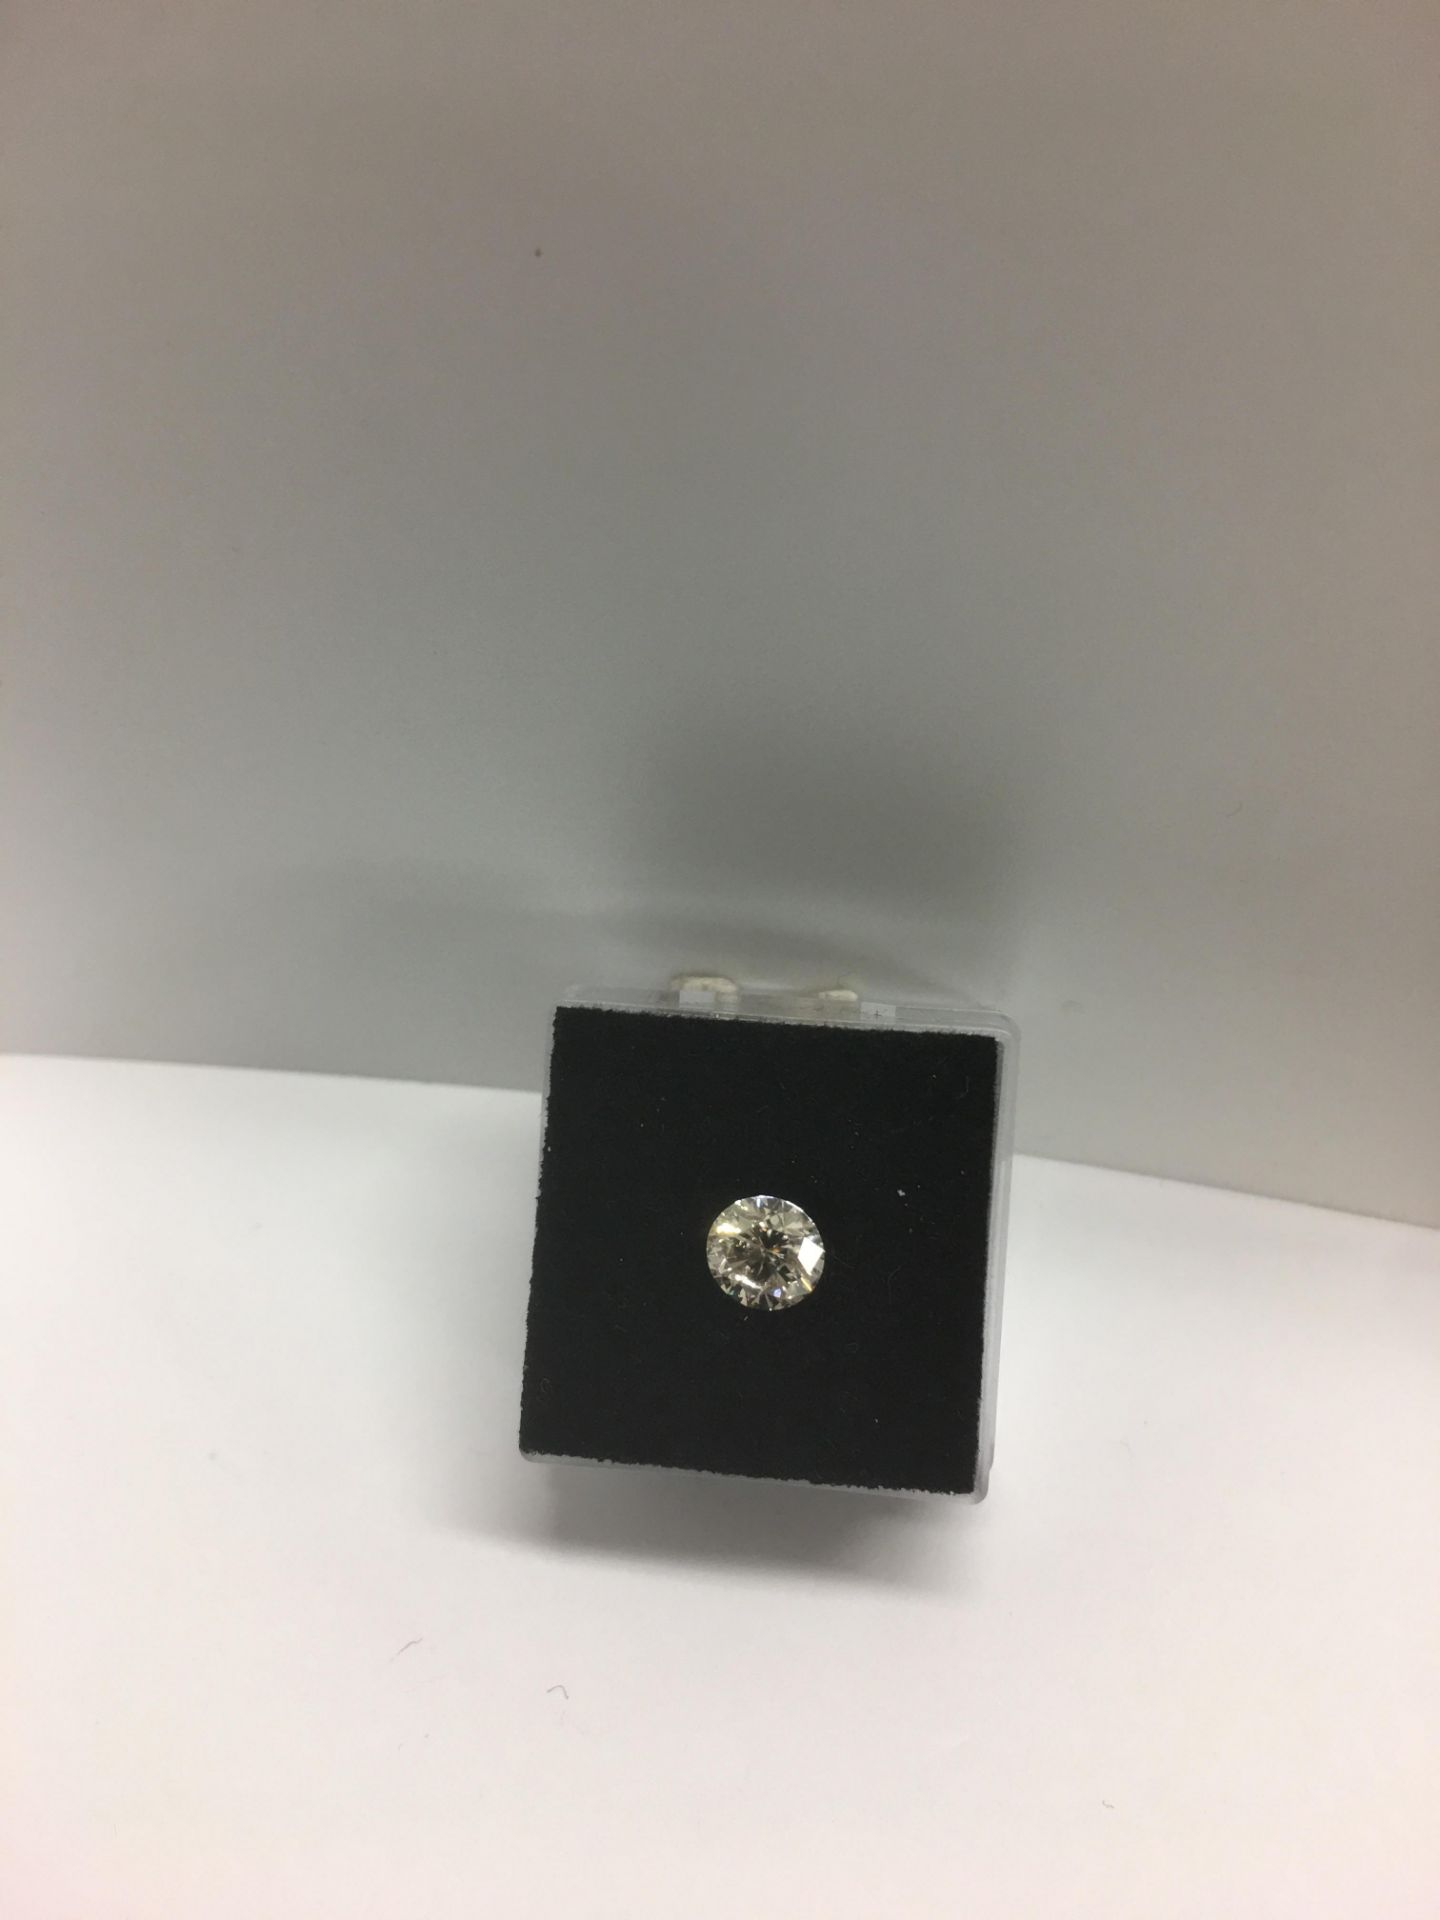 1.04ct brilliant cut diamond, loose stone.K colour and I1 clarity. IGI certificatied Valued at £5750